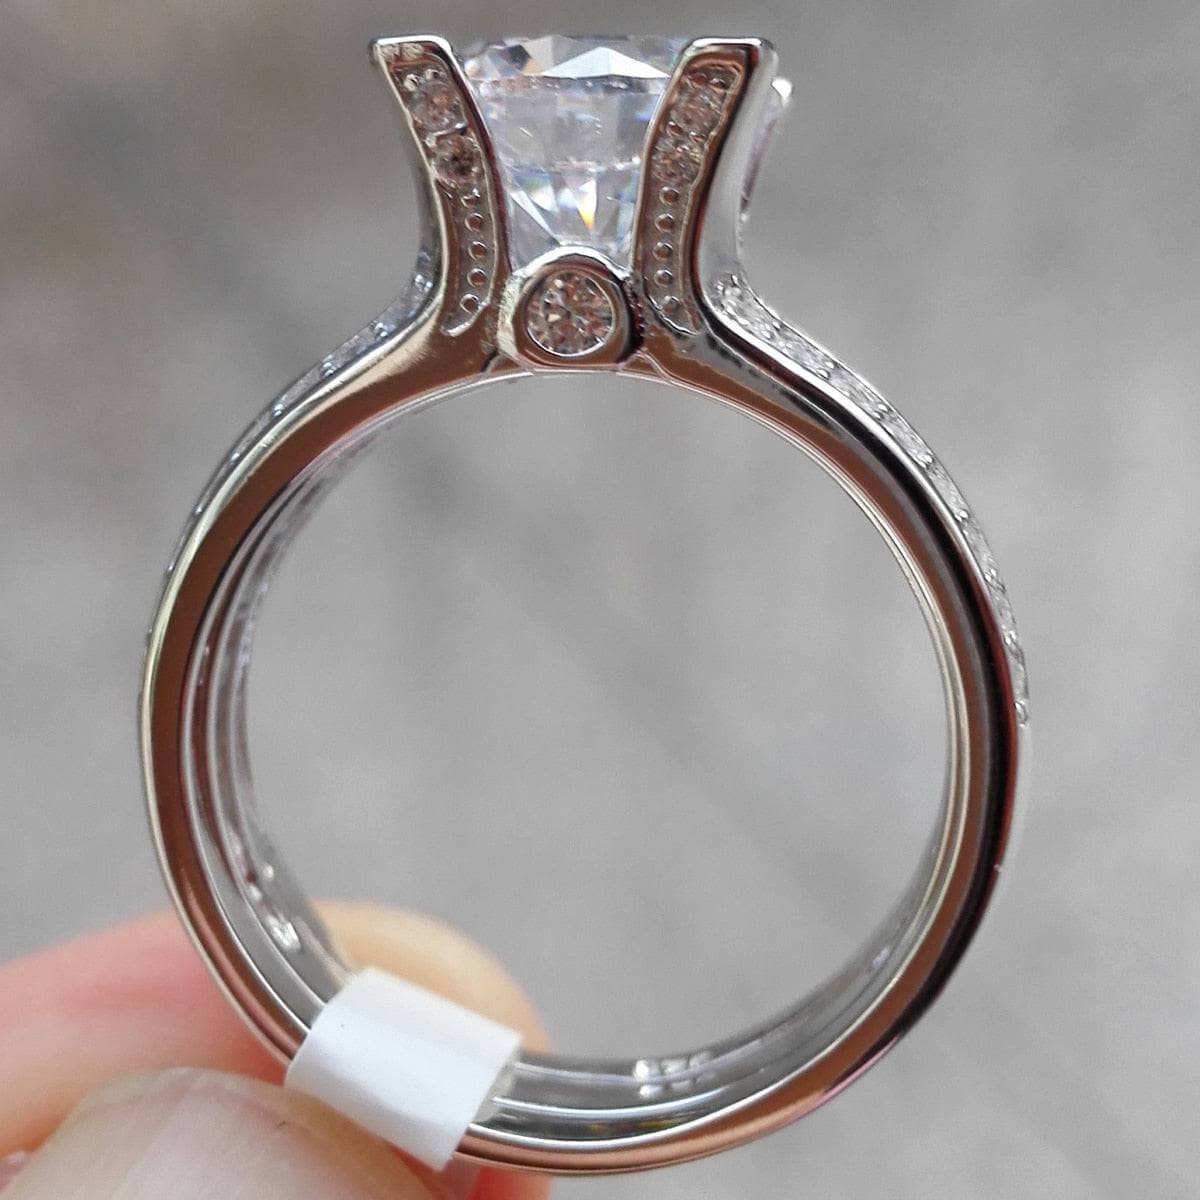 2Ct Round Cut Created Diamond Engagement Ring Set-Black Diamonds New York